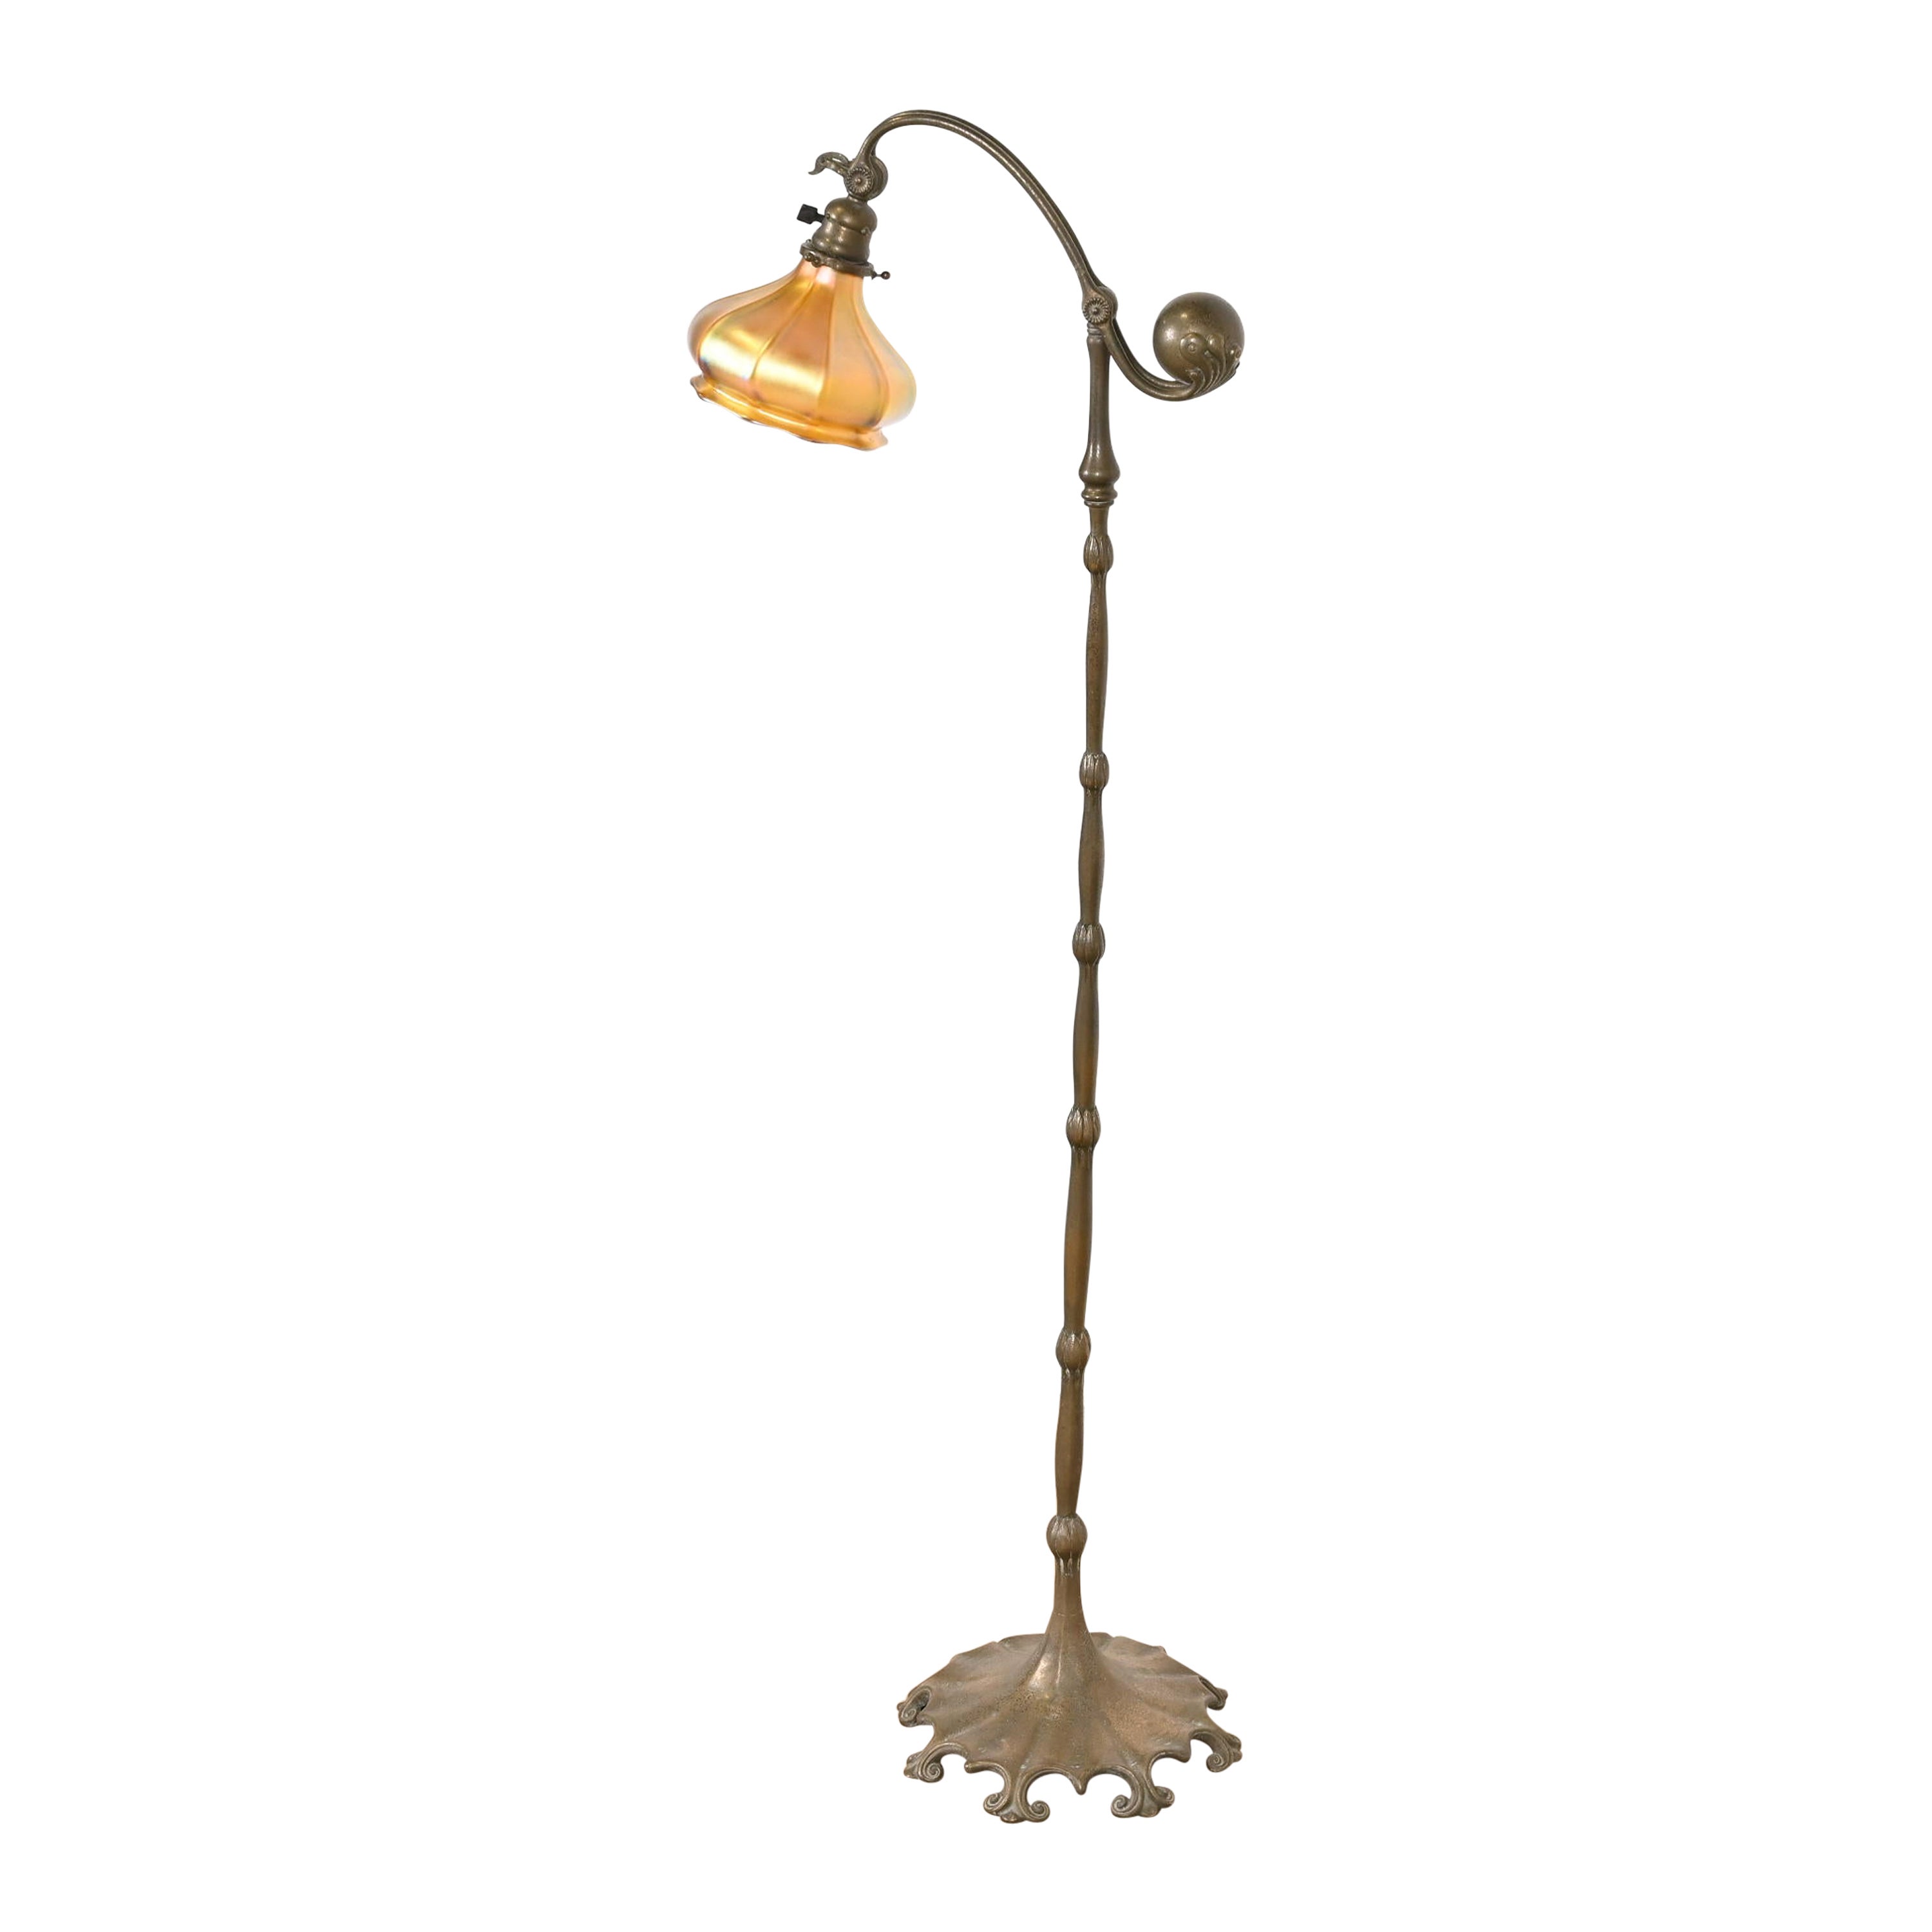 Tiffany Studios New York Bronze Counterbalance Floor Lamp, Circa 1910 For Sale